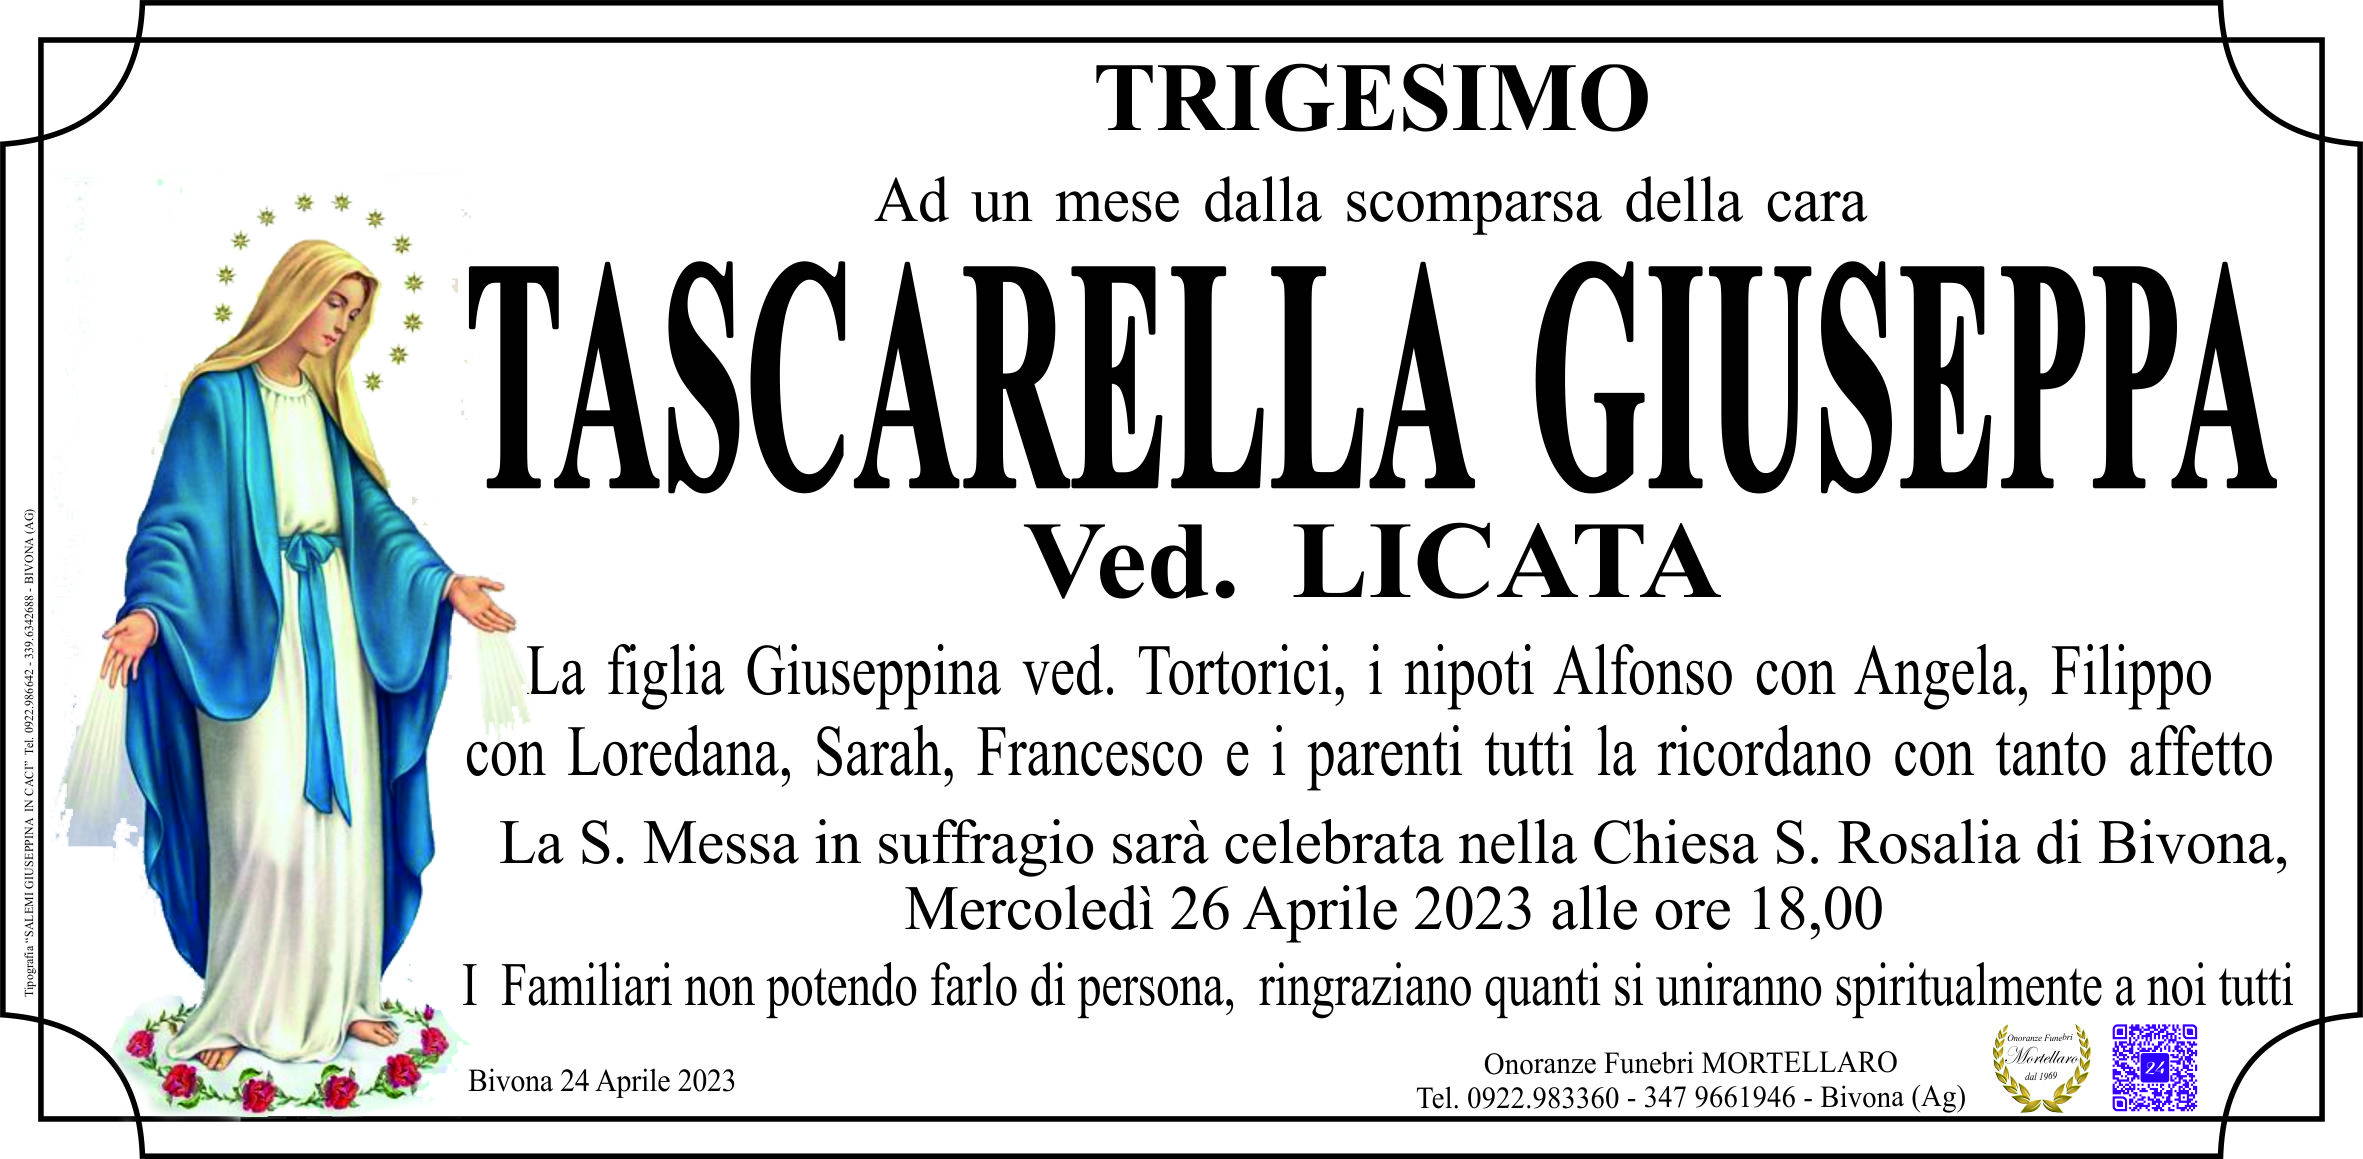 Giuseppa Tascarella